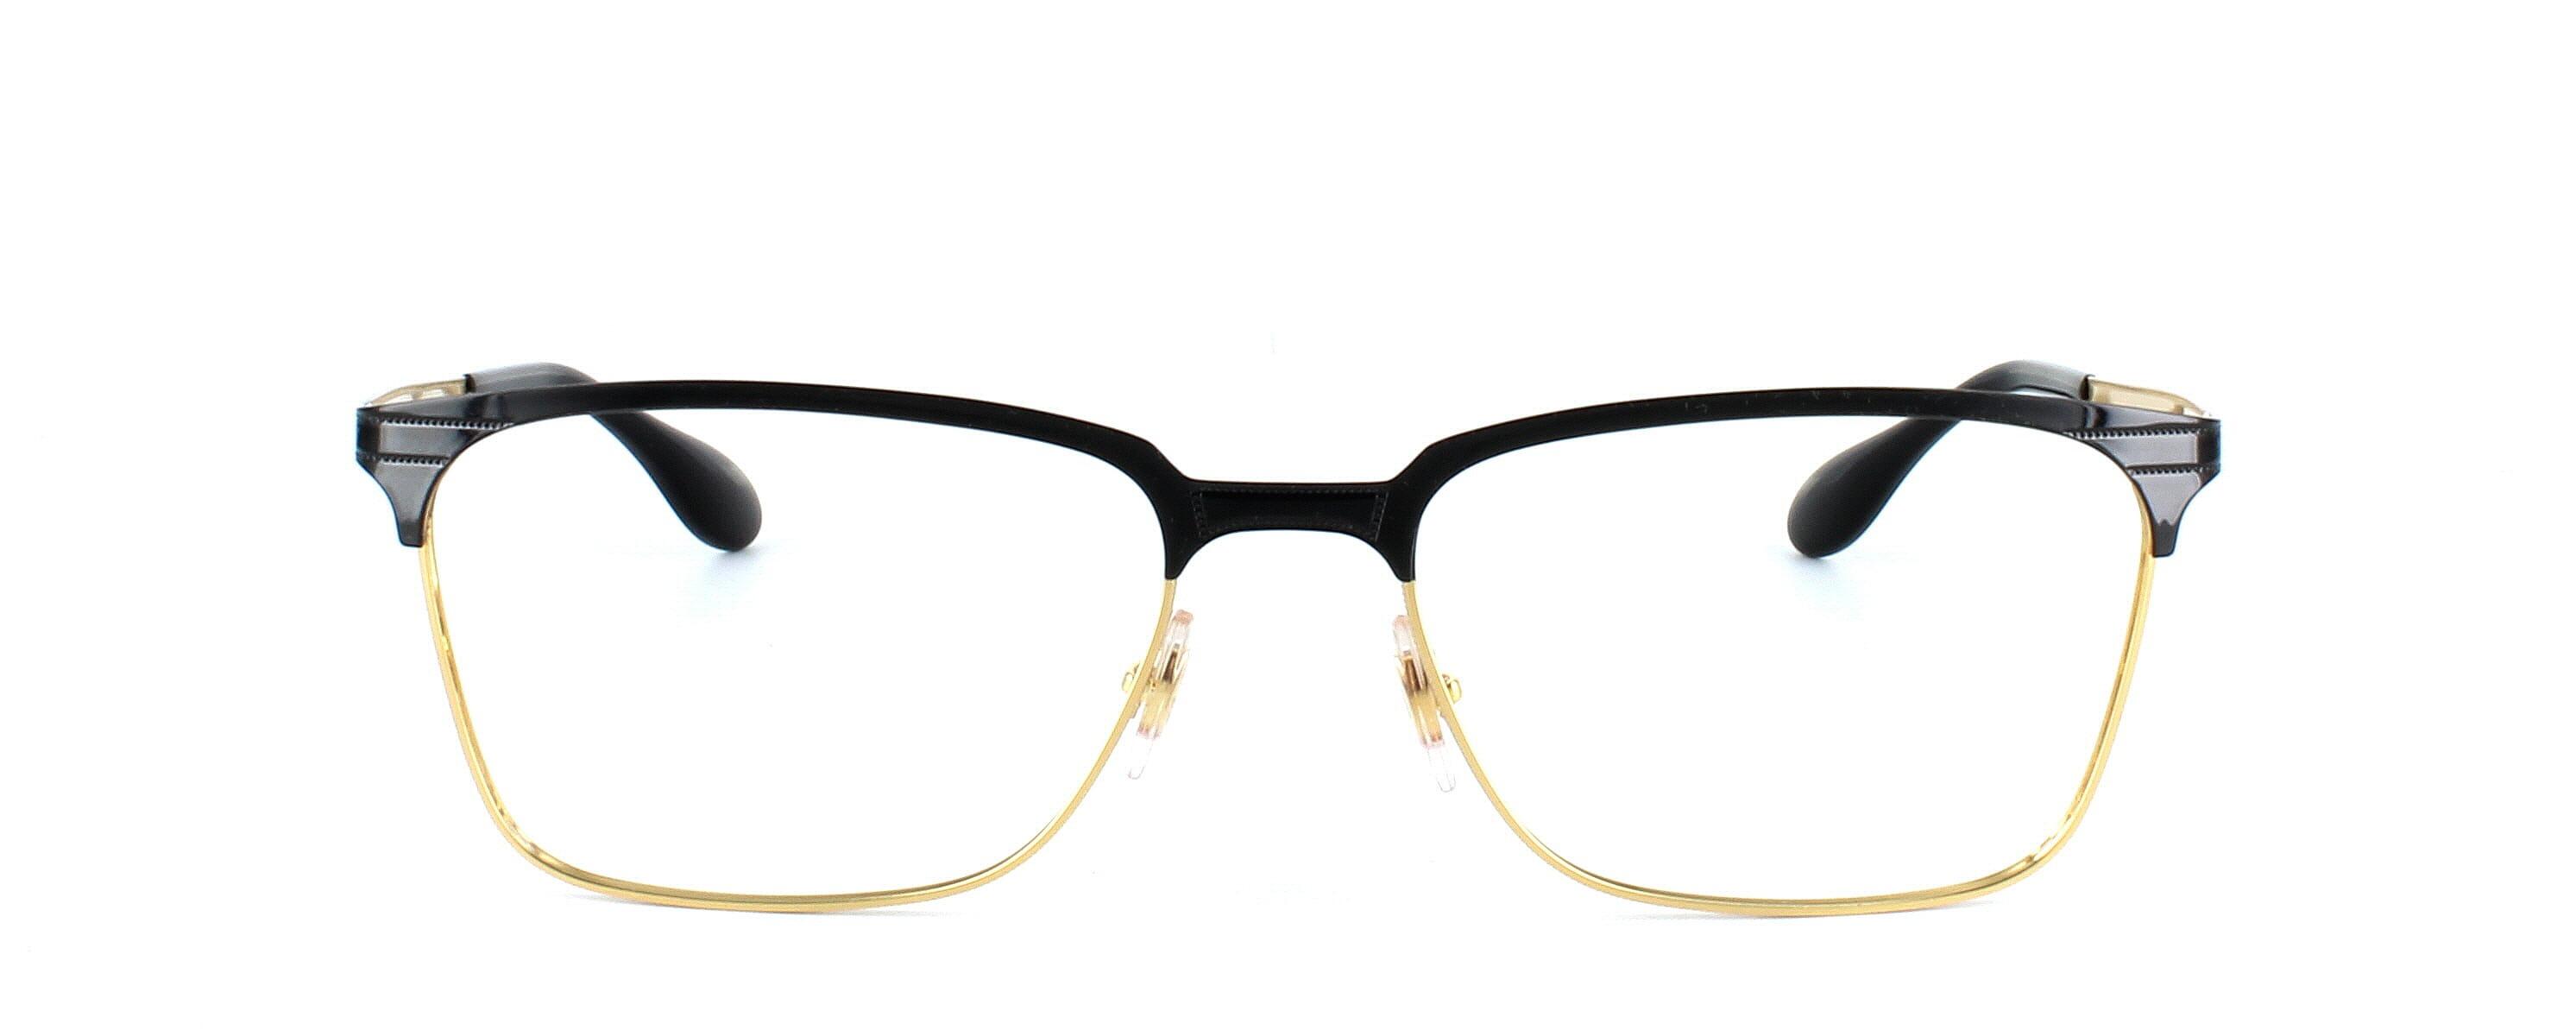 Ray Ban 6344 Black & Gold - Unisex 2-tone metal glasses frame - image view 2